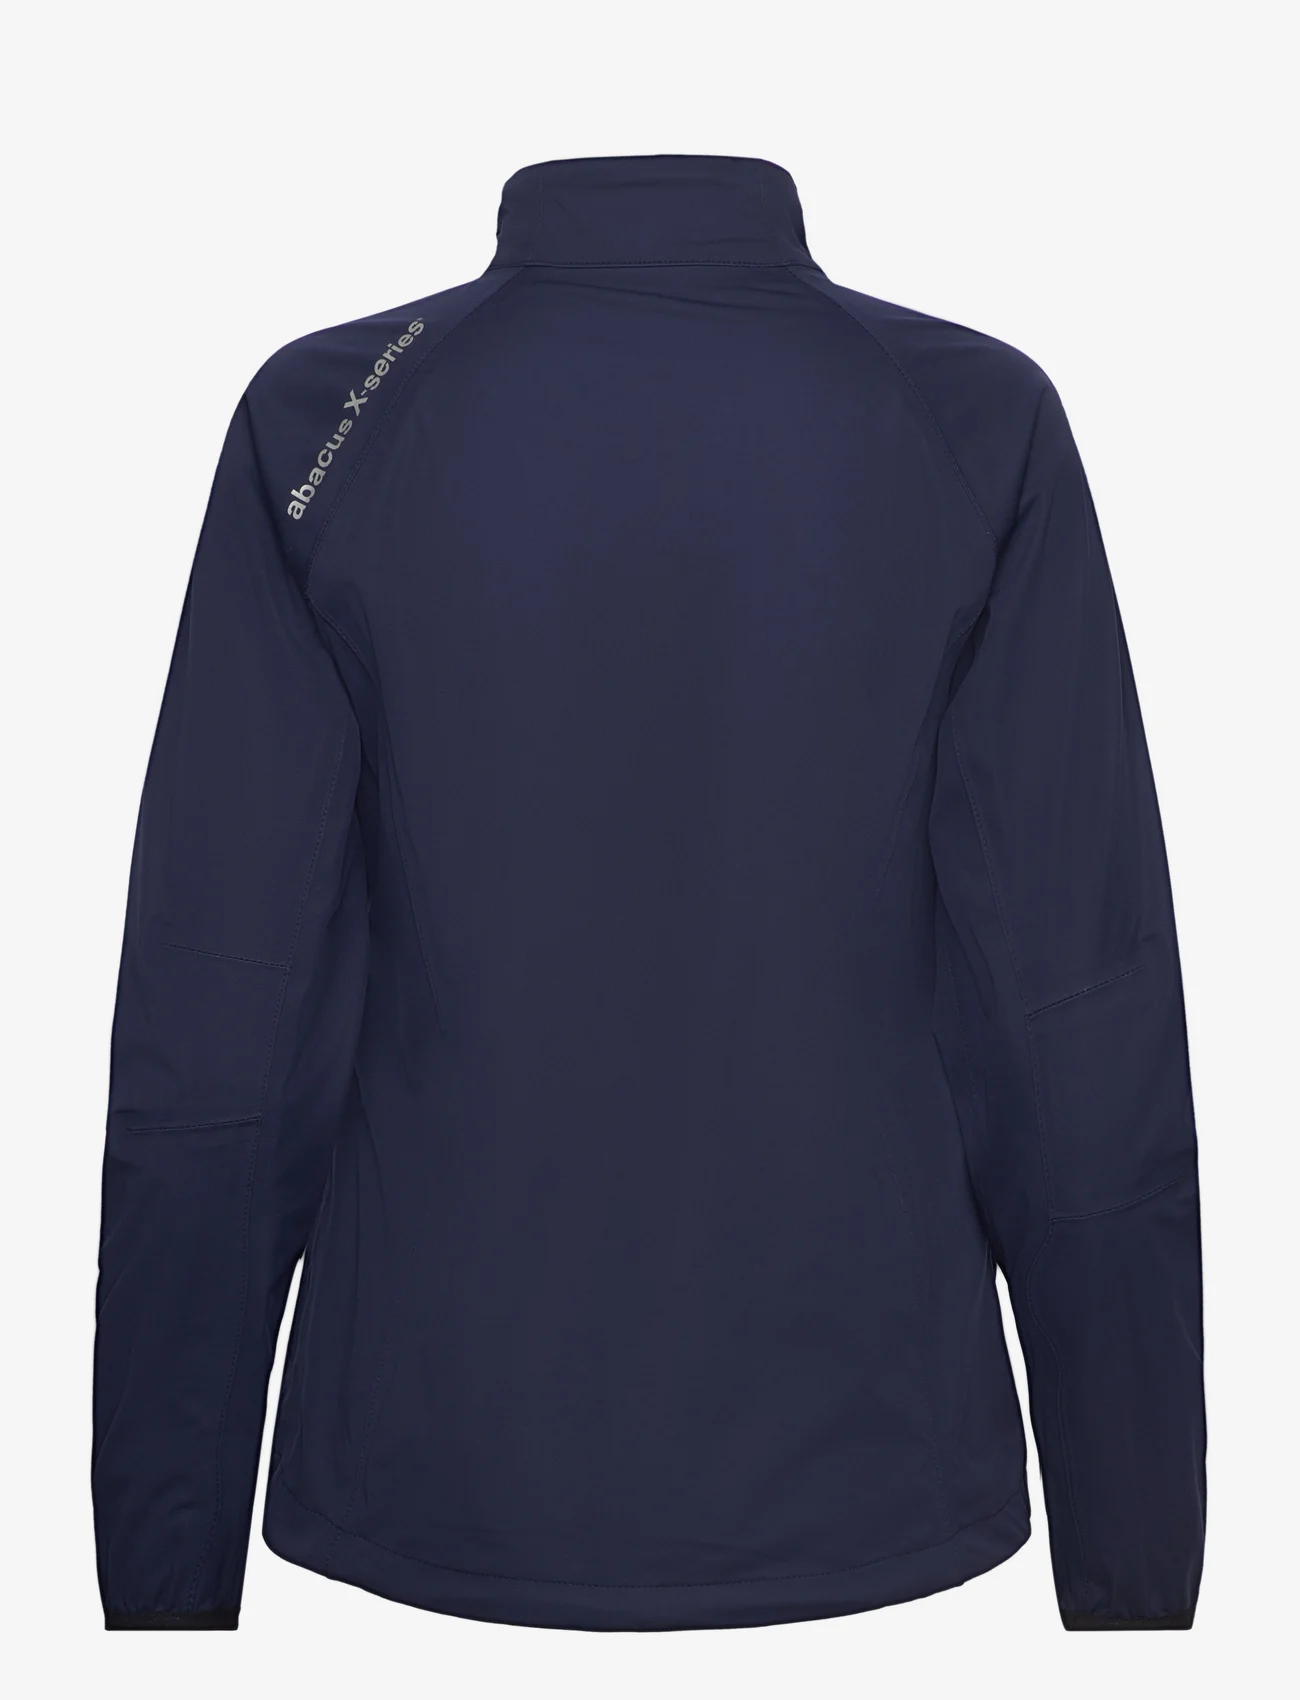 Abacus - Lds PDX waterproof jacket - golf-jacken - midnight navy - 1